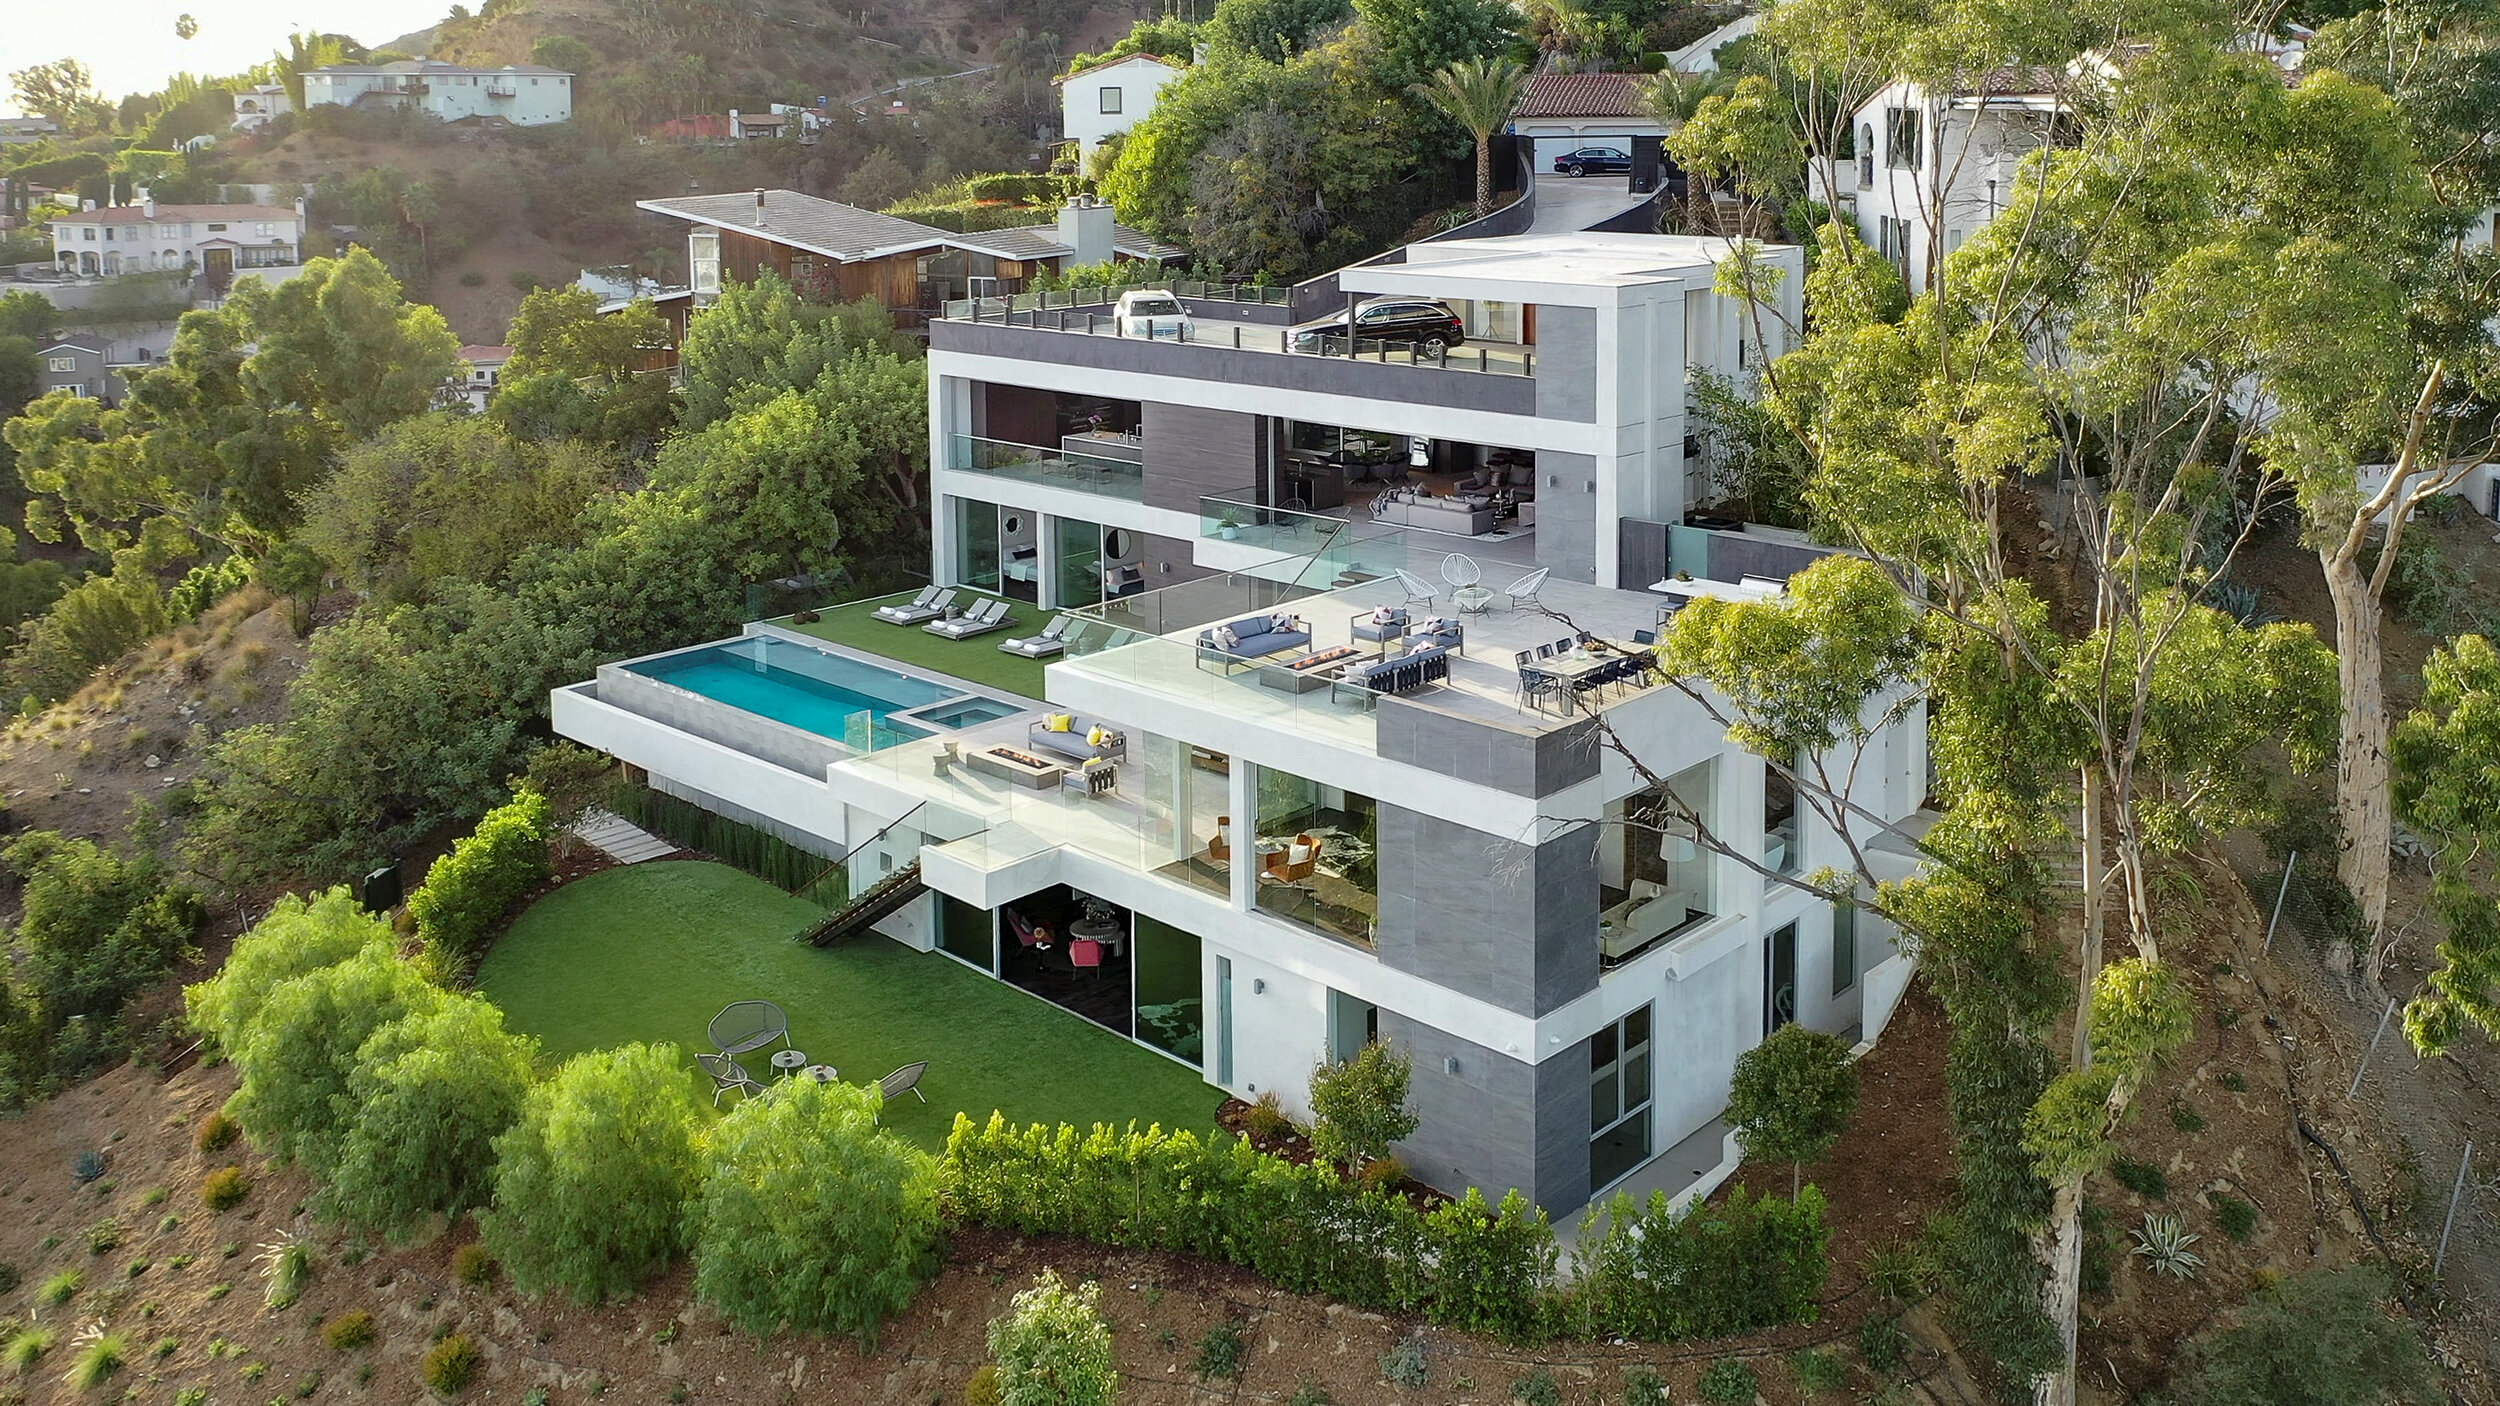 Los Tilos terraced Hollywood Hills modern home sitting far out on the hillside